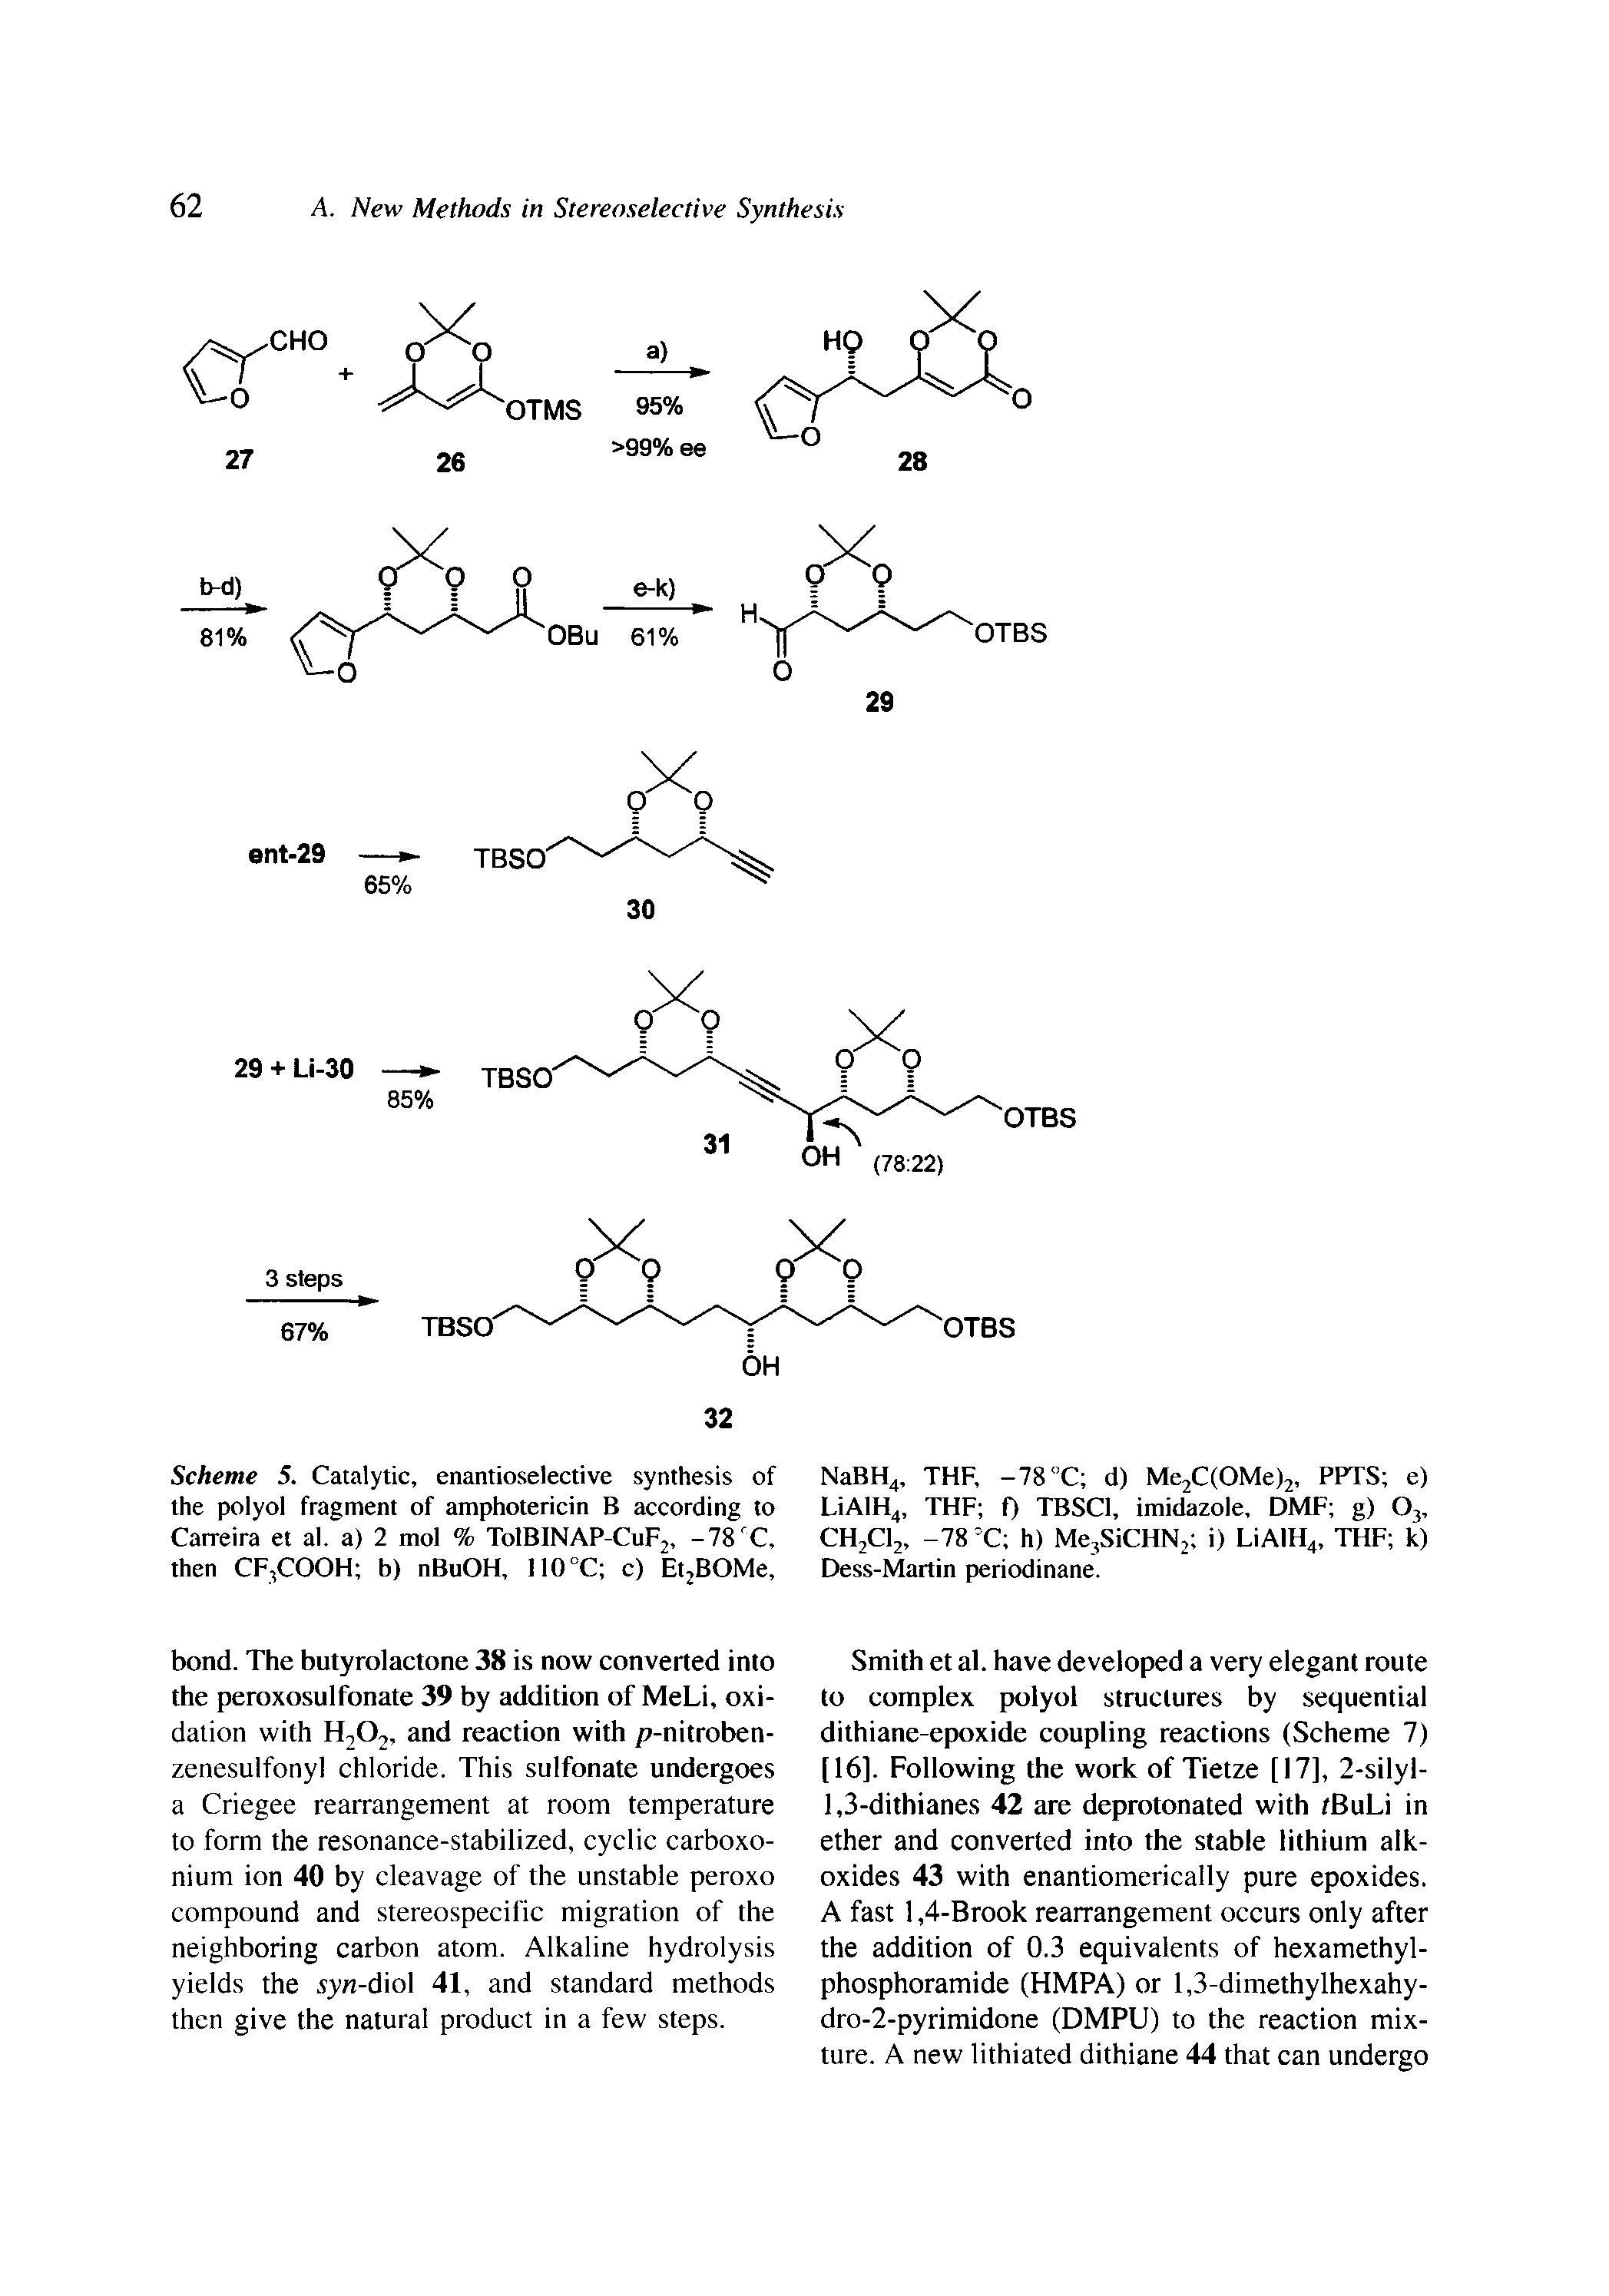 Scheme 5. Catalytic, enantioselective synthesis of the polyol fragment of amphotericin B according to Carreira et al. a) 2 mol % TolBINAP-CuFj, -78 X, then CF,COOH b) nBuOH, IlOX c) EtjBOMe,...